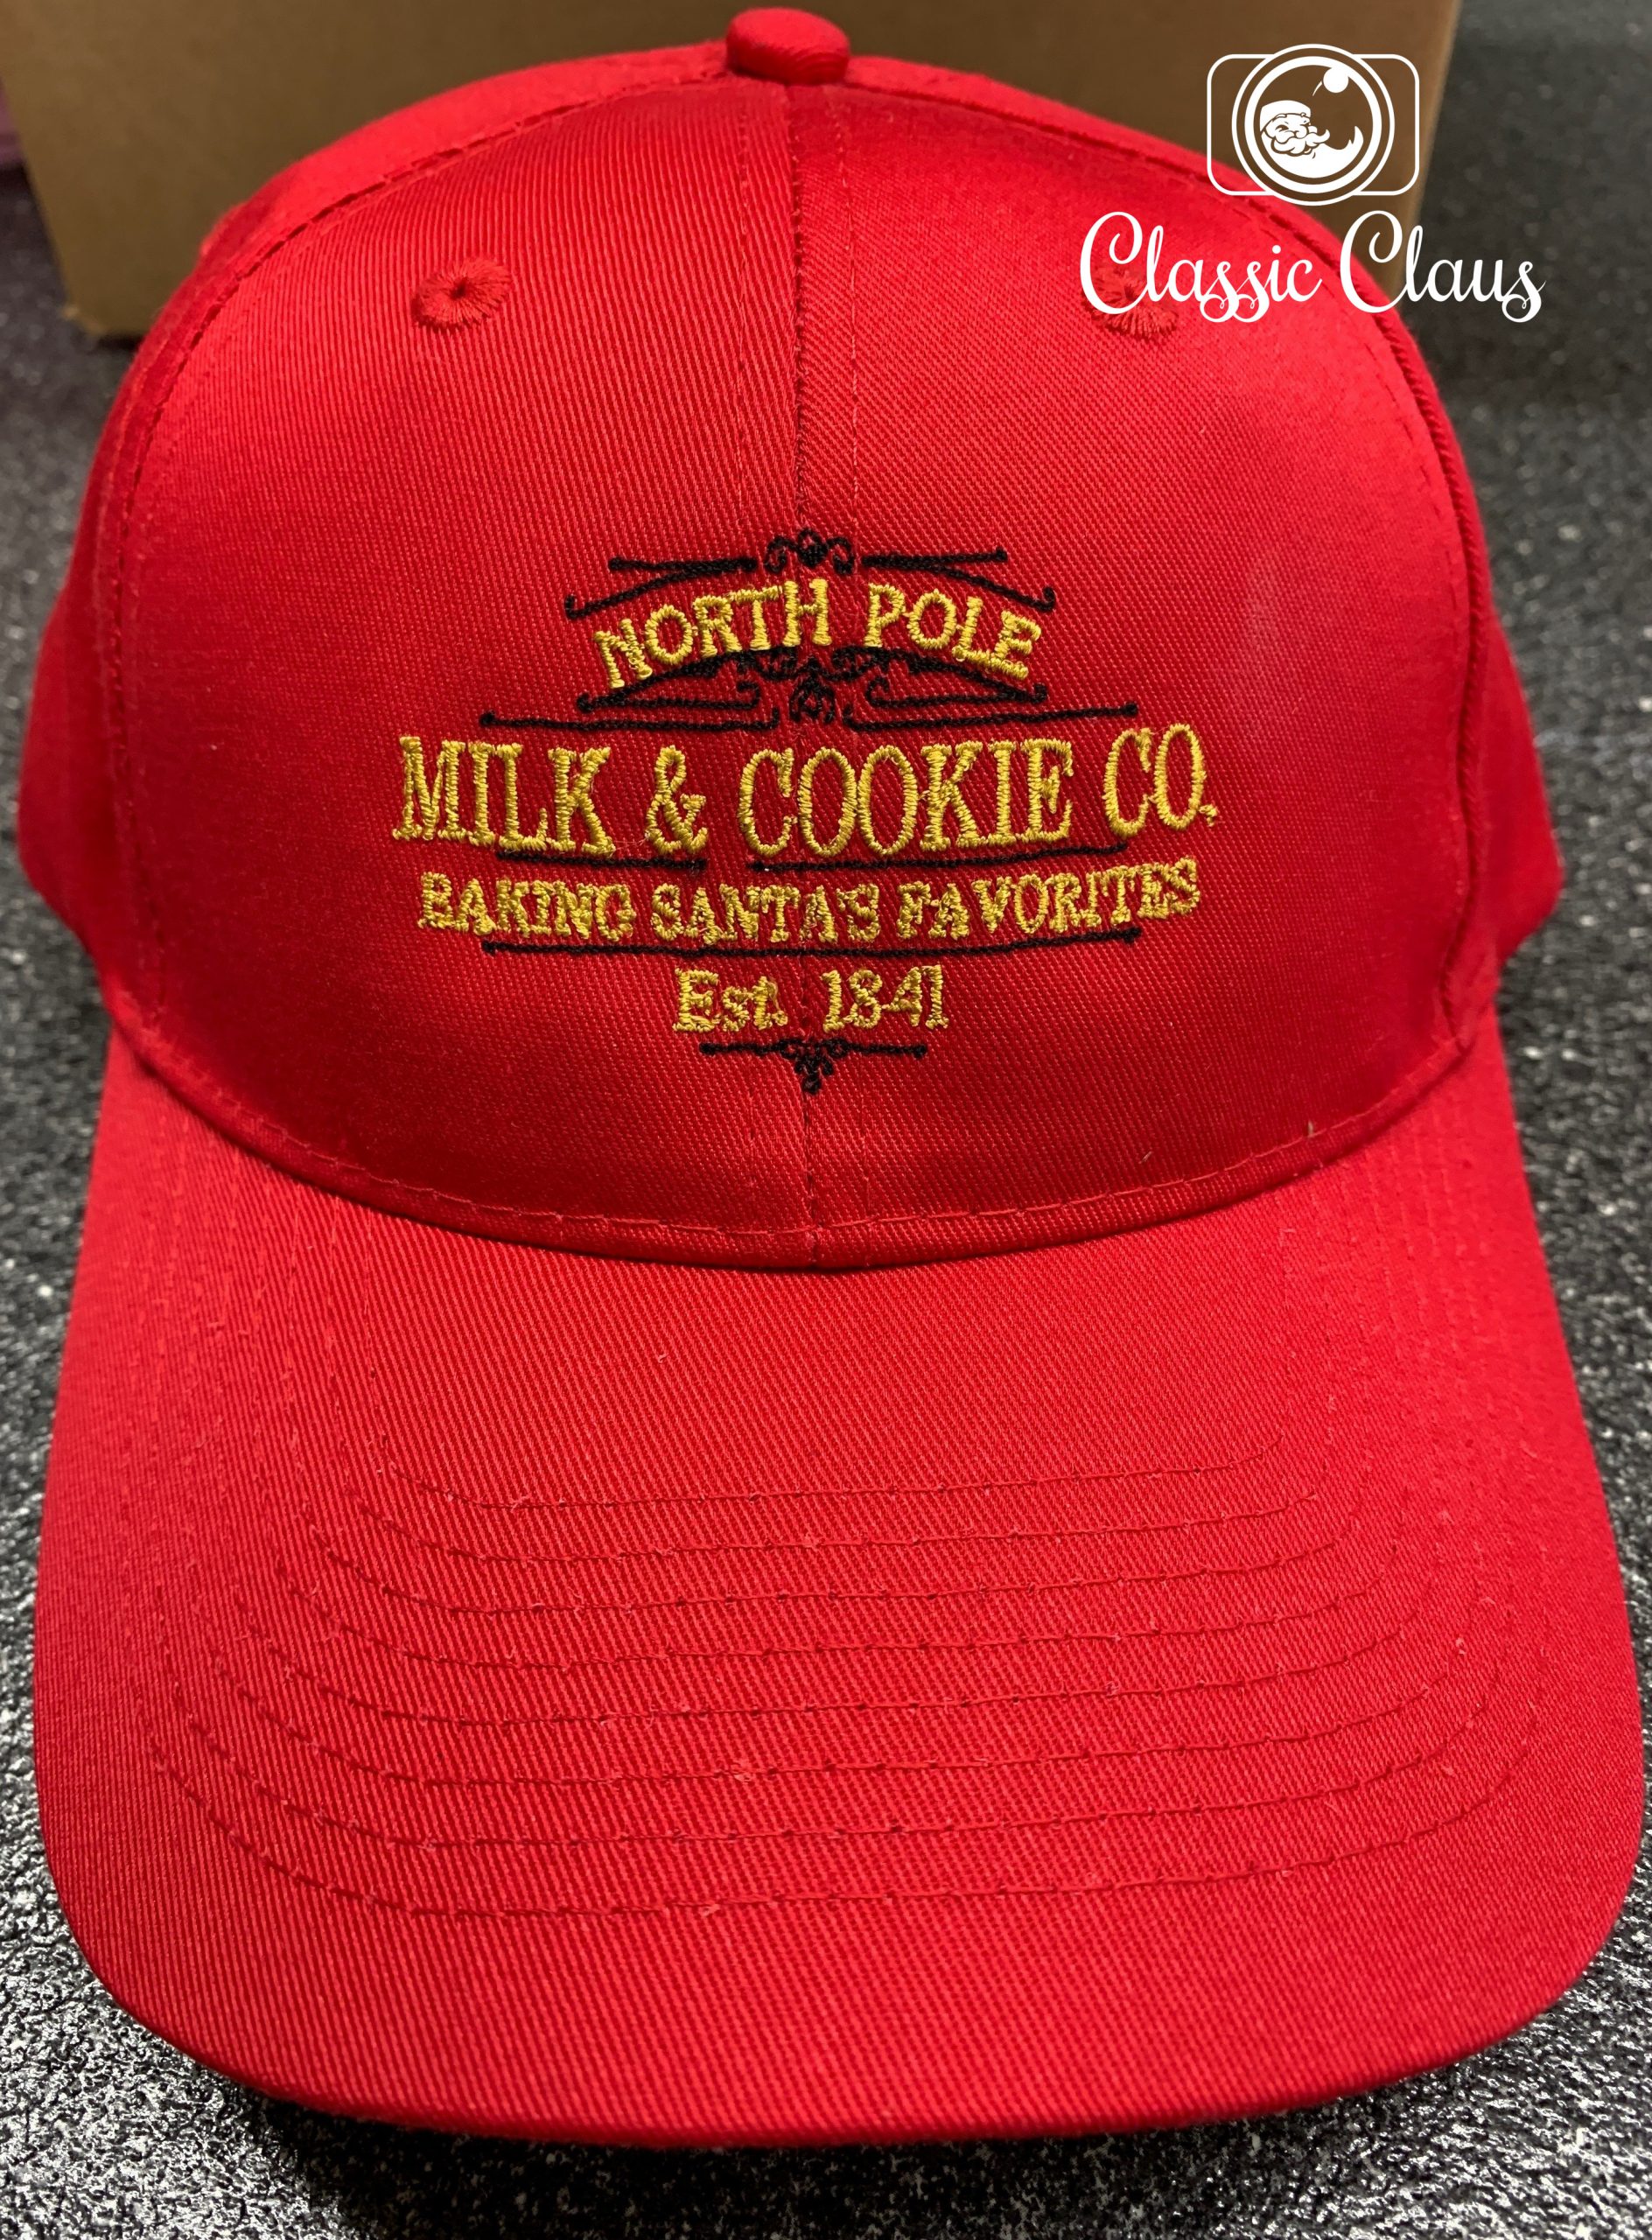 North Pole Milk and Cookie Company “Baking Santa’s Favorite” Est. 1841 Hat